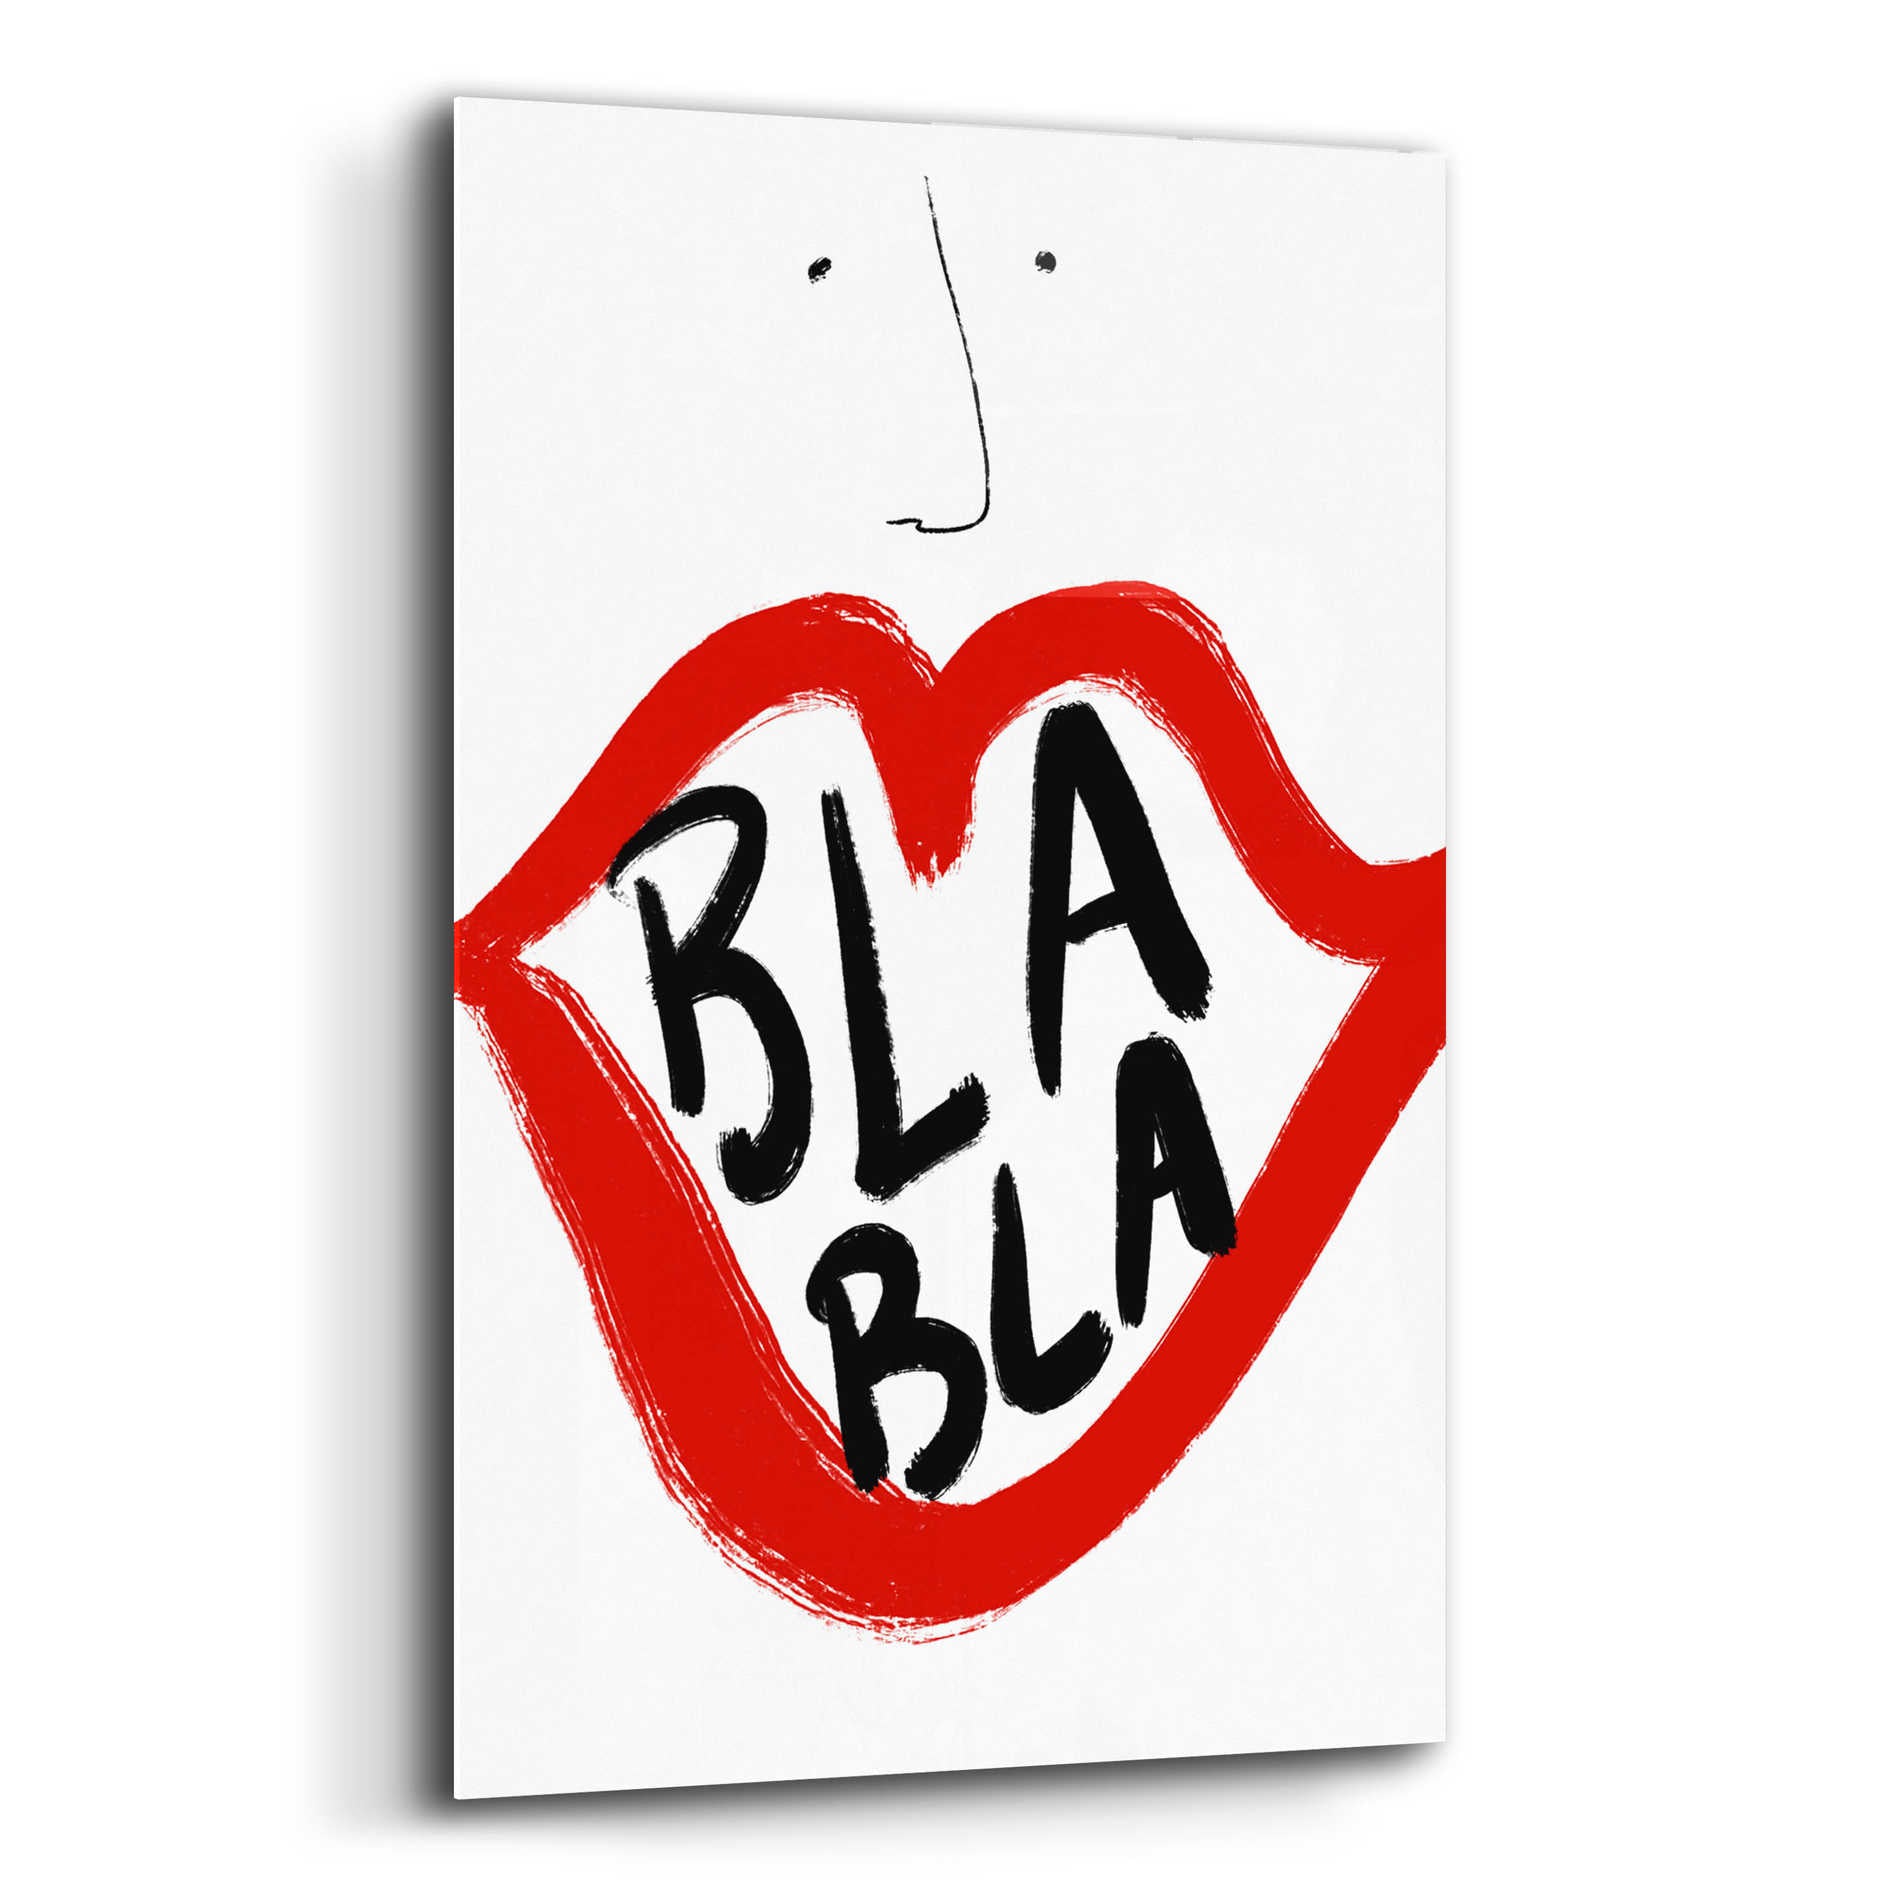 Epic Art 'Bla Bla' by Cesare Bellassai, Acrylic Glass Wall Art,16x24